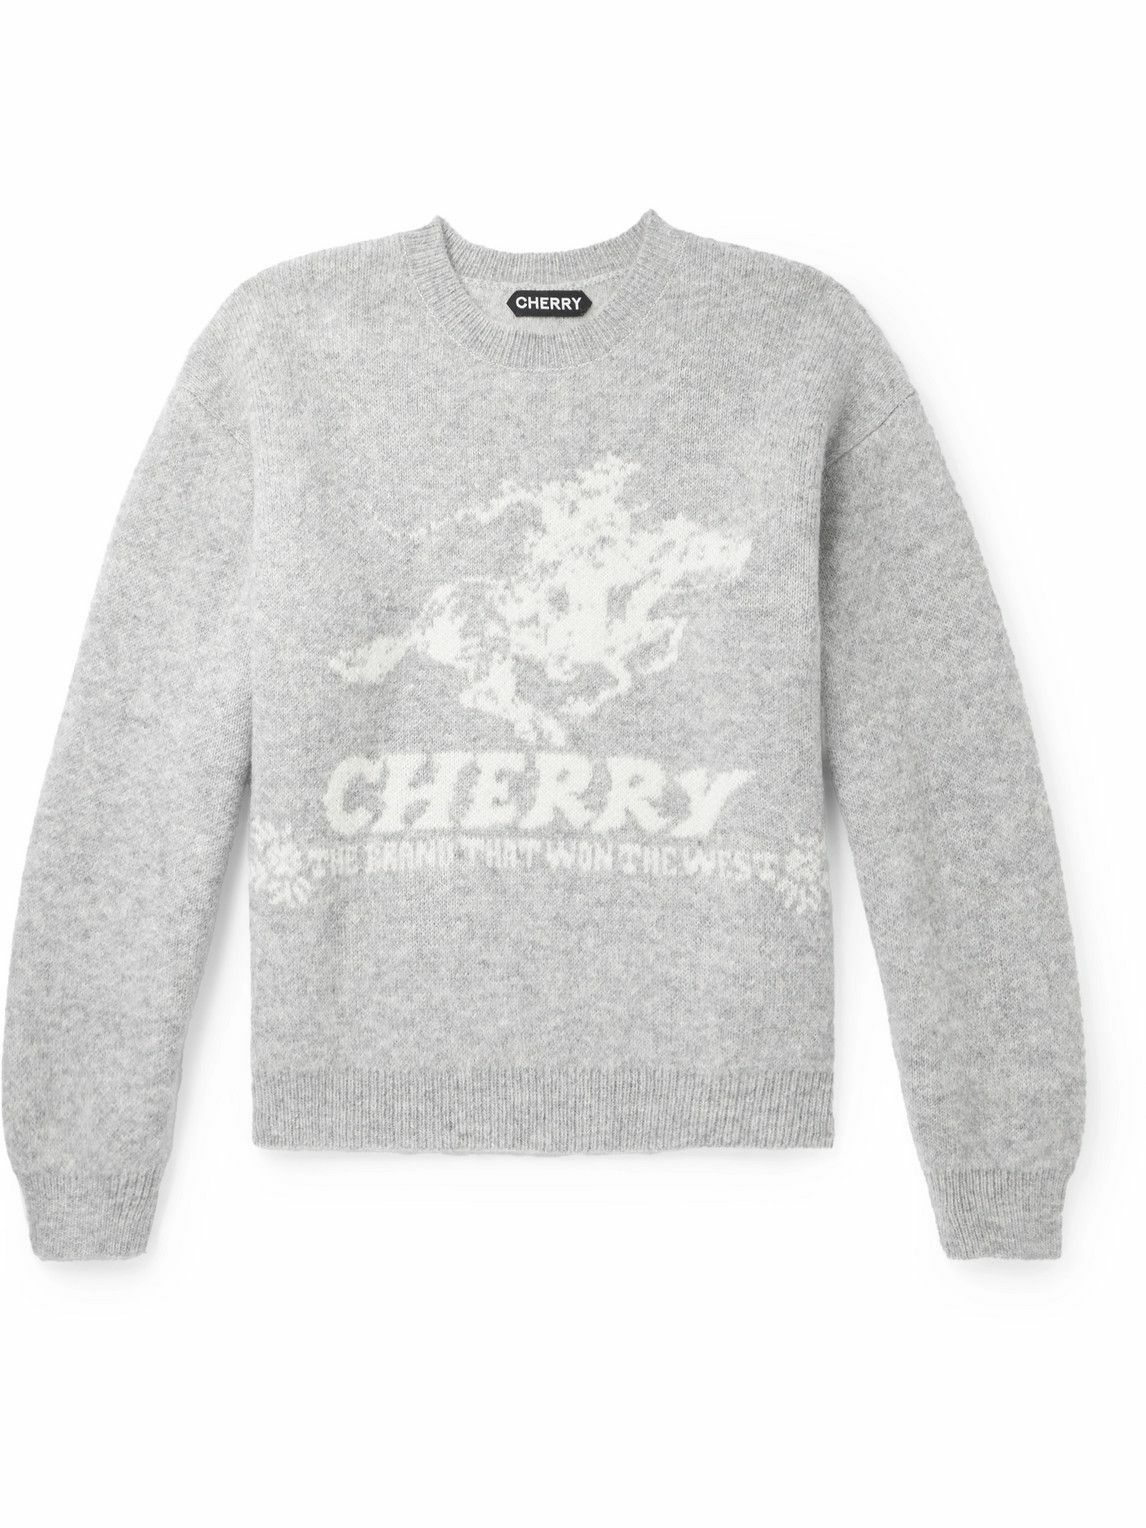 Photo: Cherry Los Angeles - Intarsia-Knit Alpaca-Blend Sweater - Gray